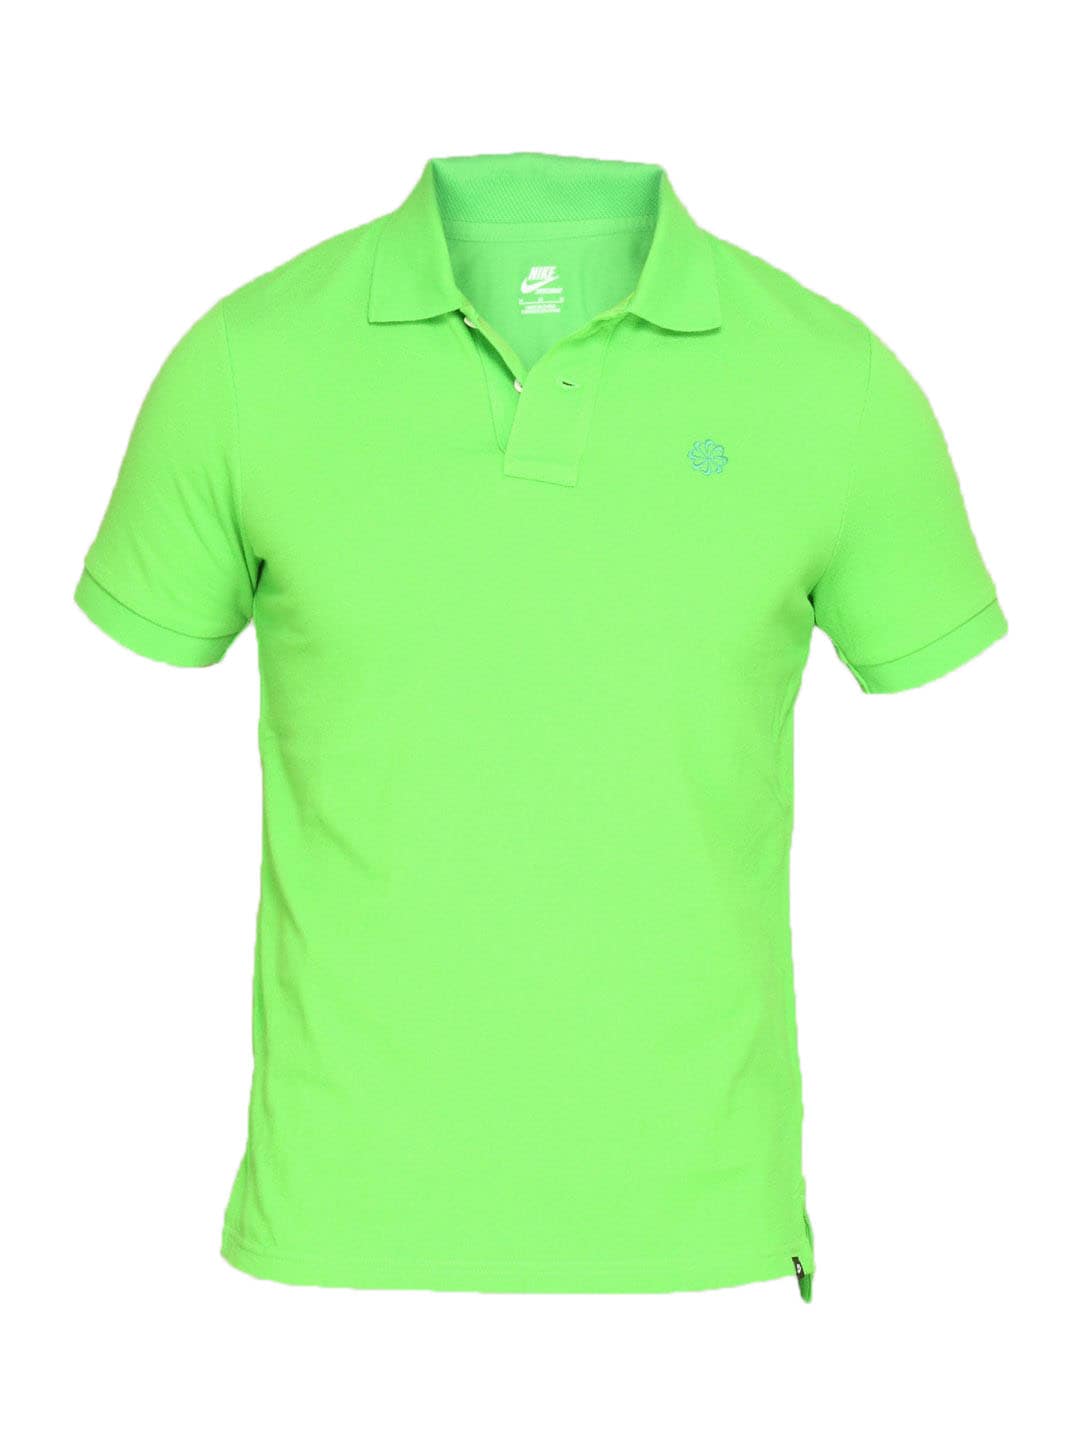 Nike Men's The Polo Green T-shirt